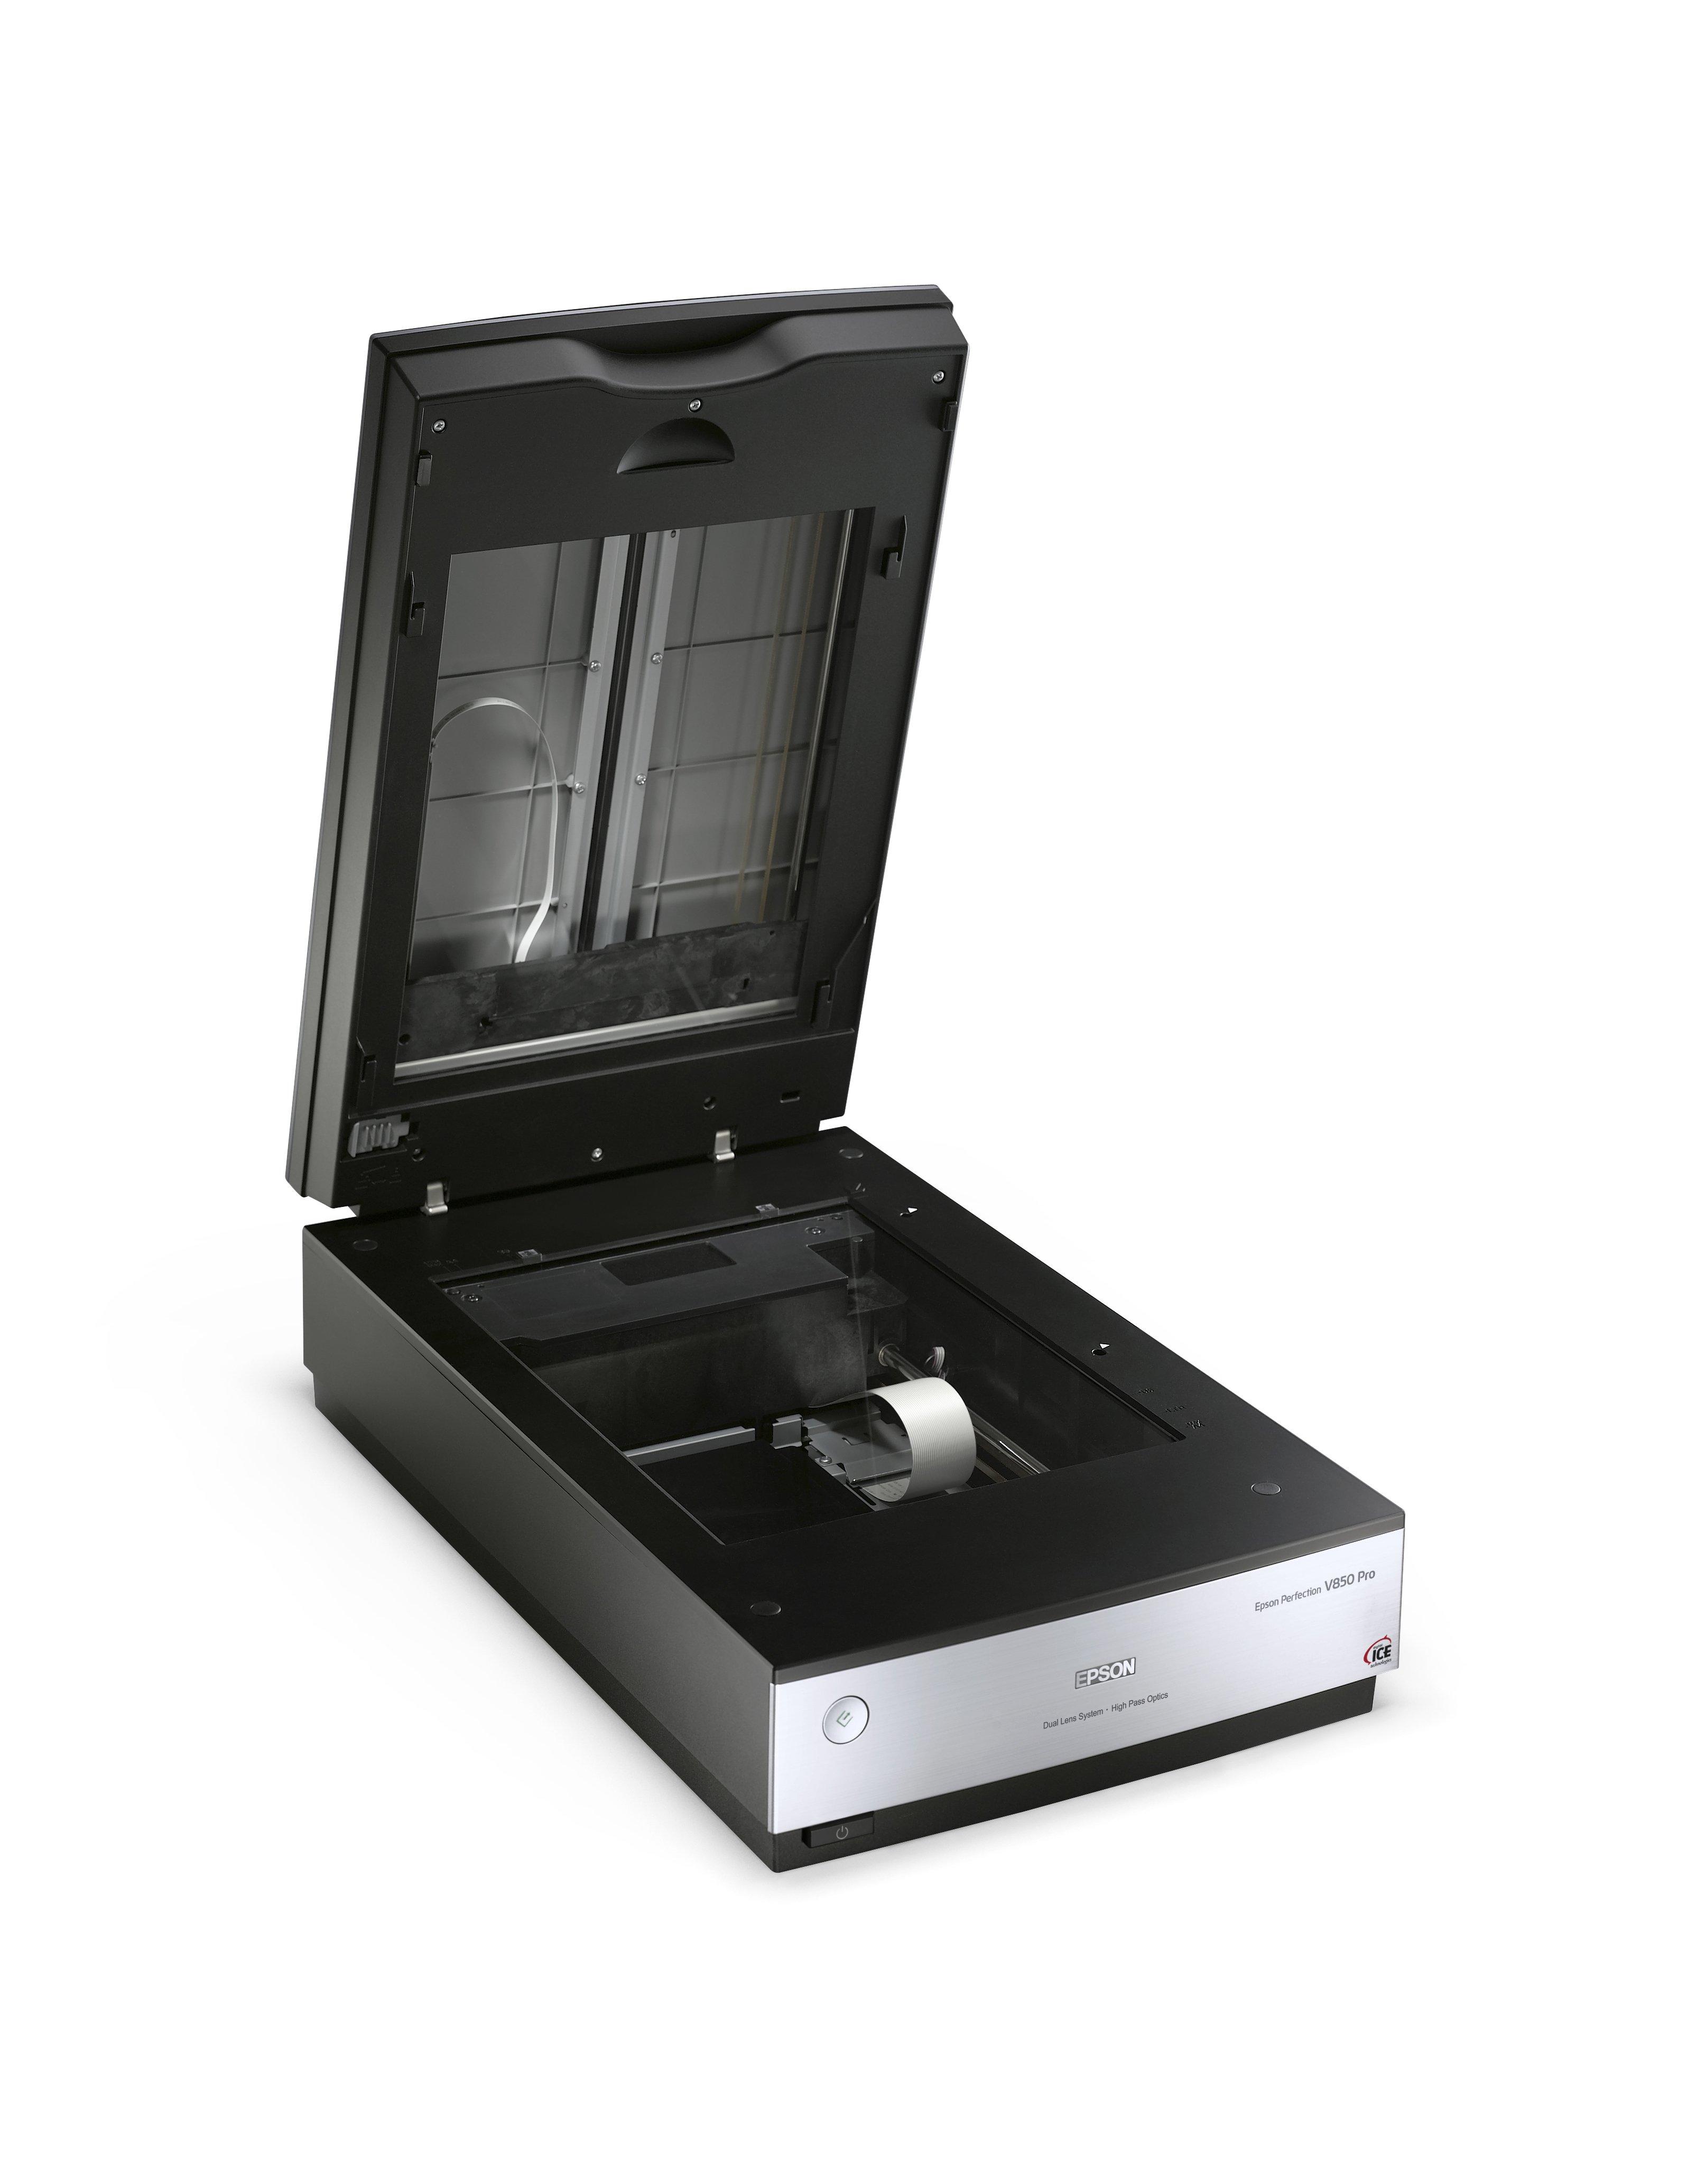 EPSON  Perfection V850 Pro Scanner USB 